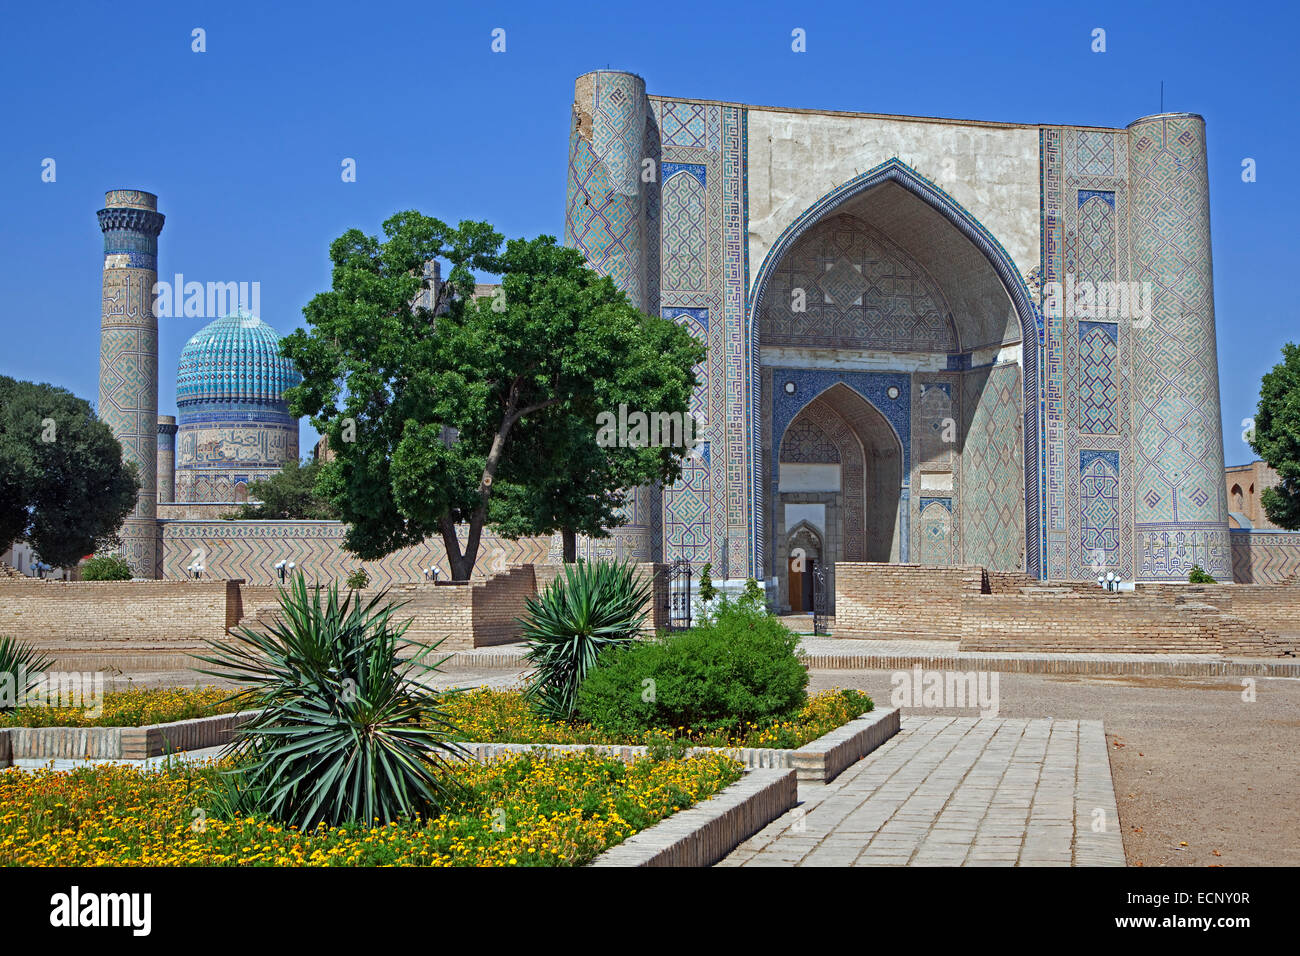 Portal of the Bibi Khanym Mosque / Bibi Khanum Mosque, historical Friday mosque in Samarkand, Uzbekistan Stock Photo